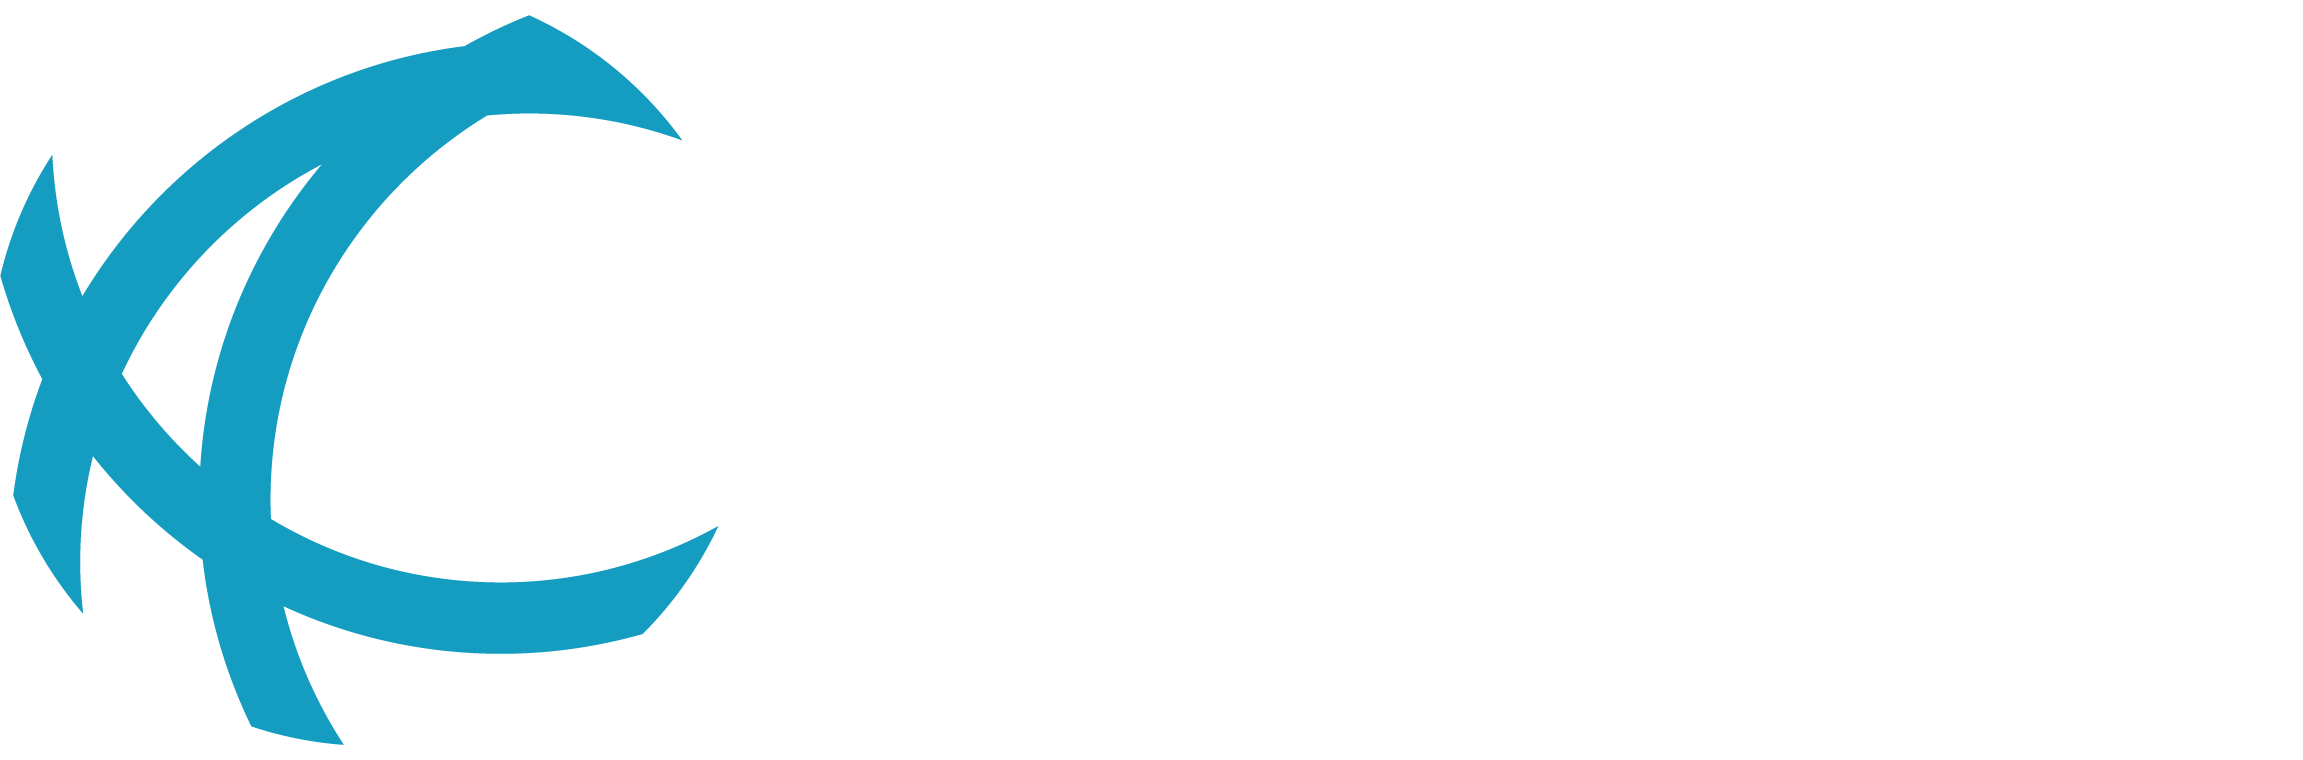 مختبرات سعودي آجال